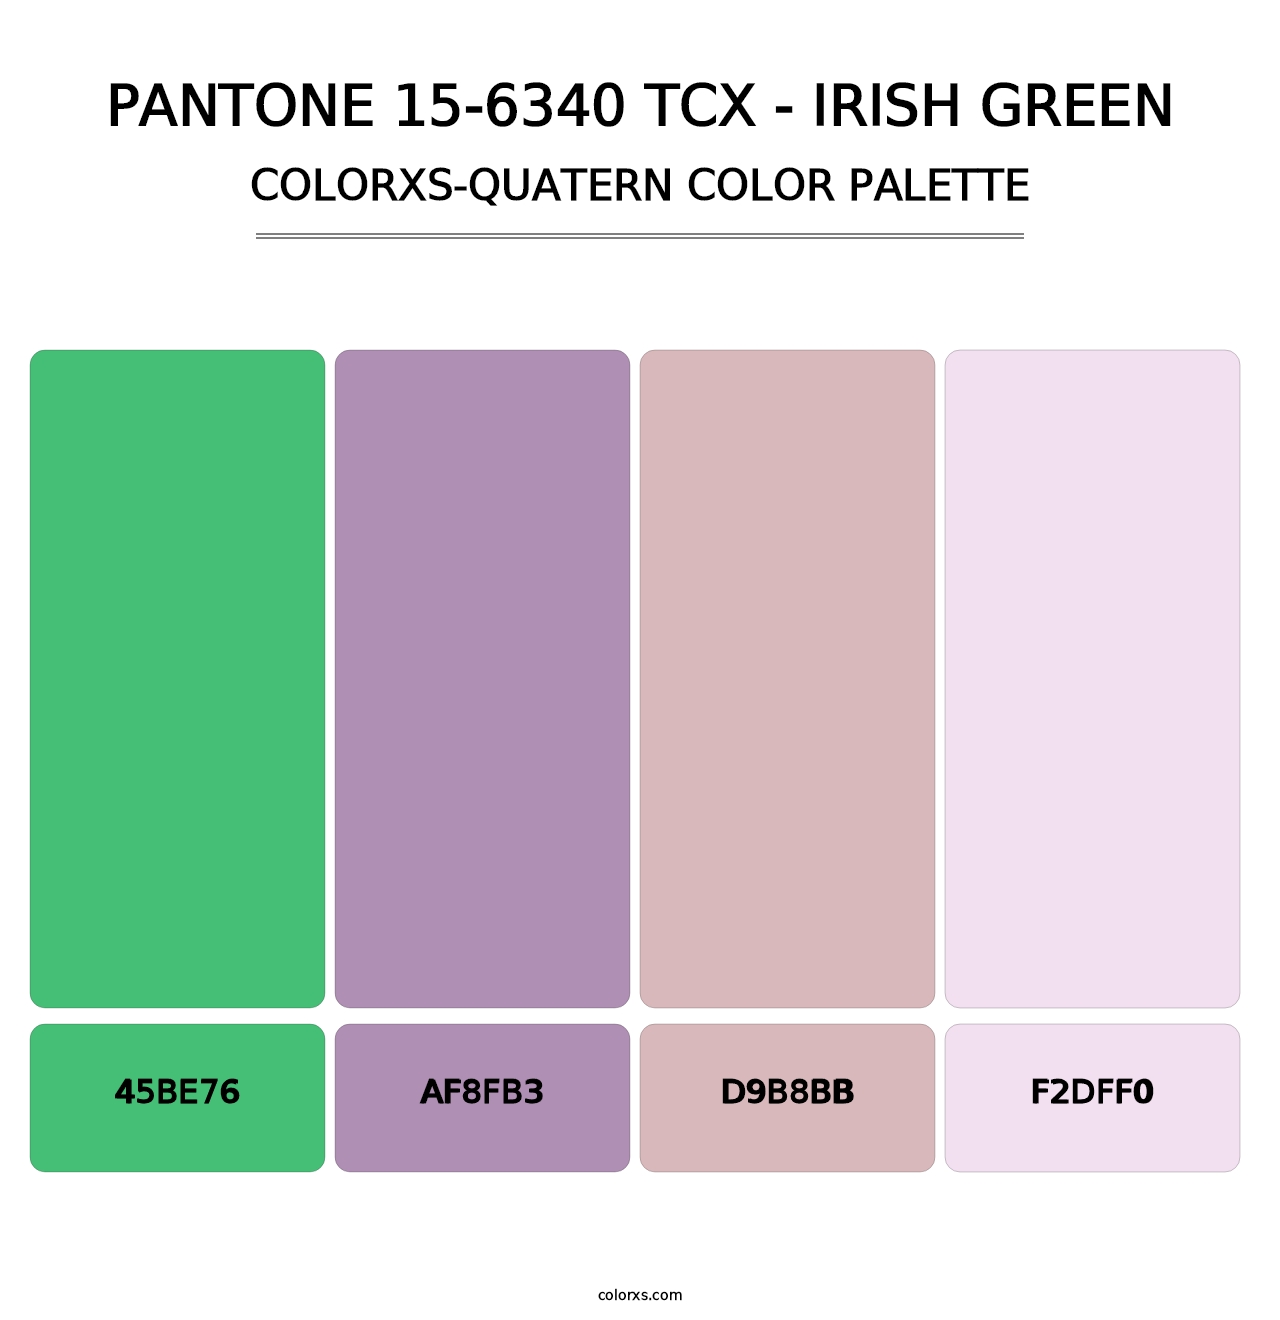 PANTONE 15-6340 TCX - Irish Green - Colorxs Quatern Palette